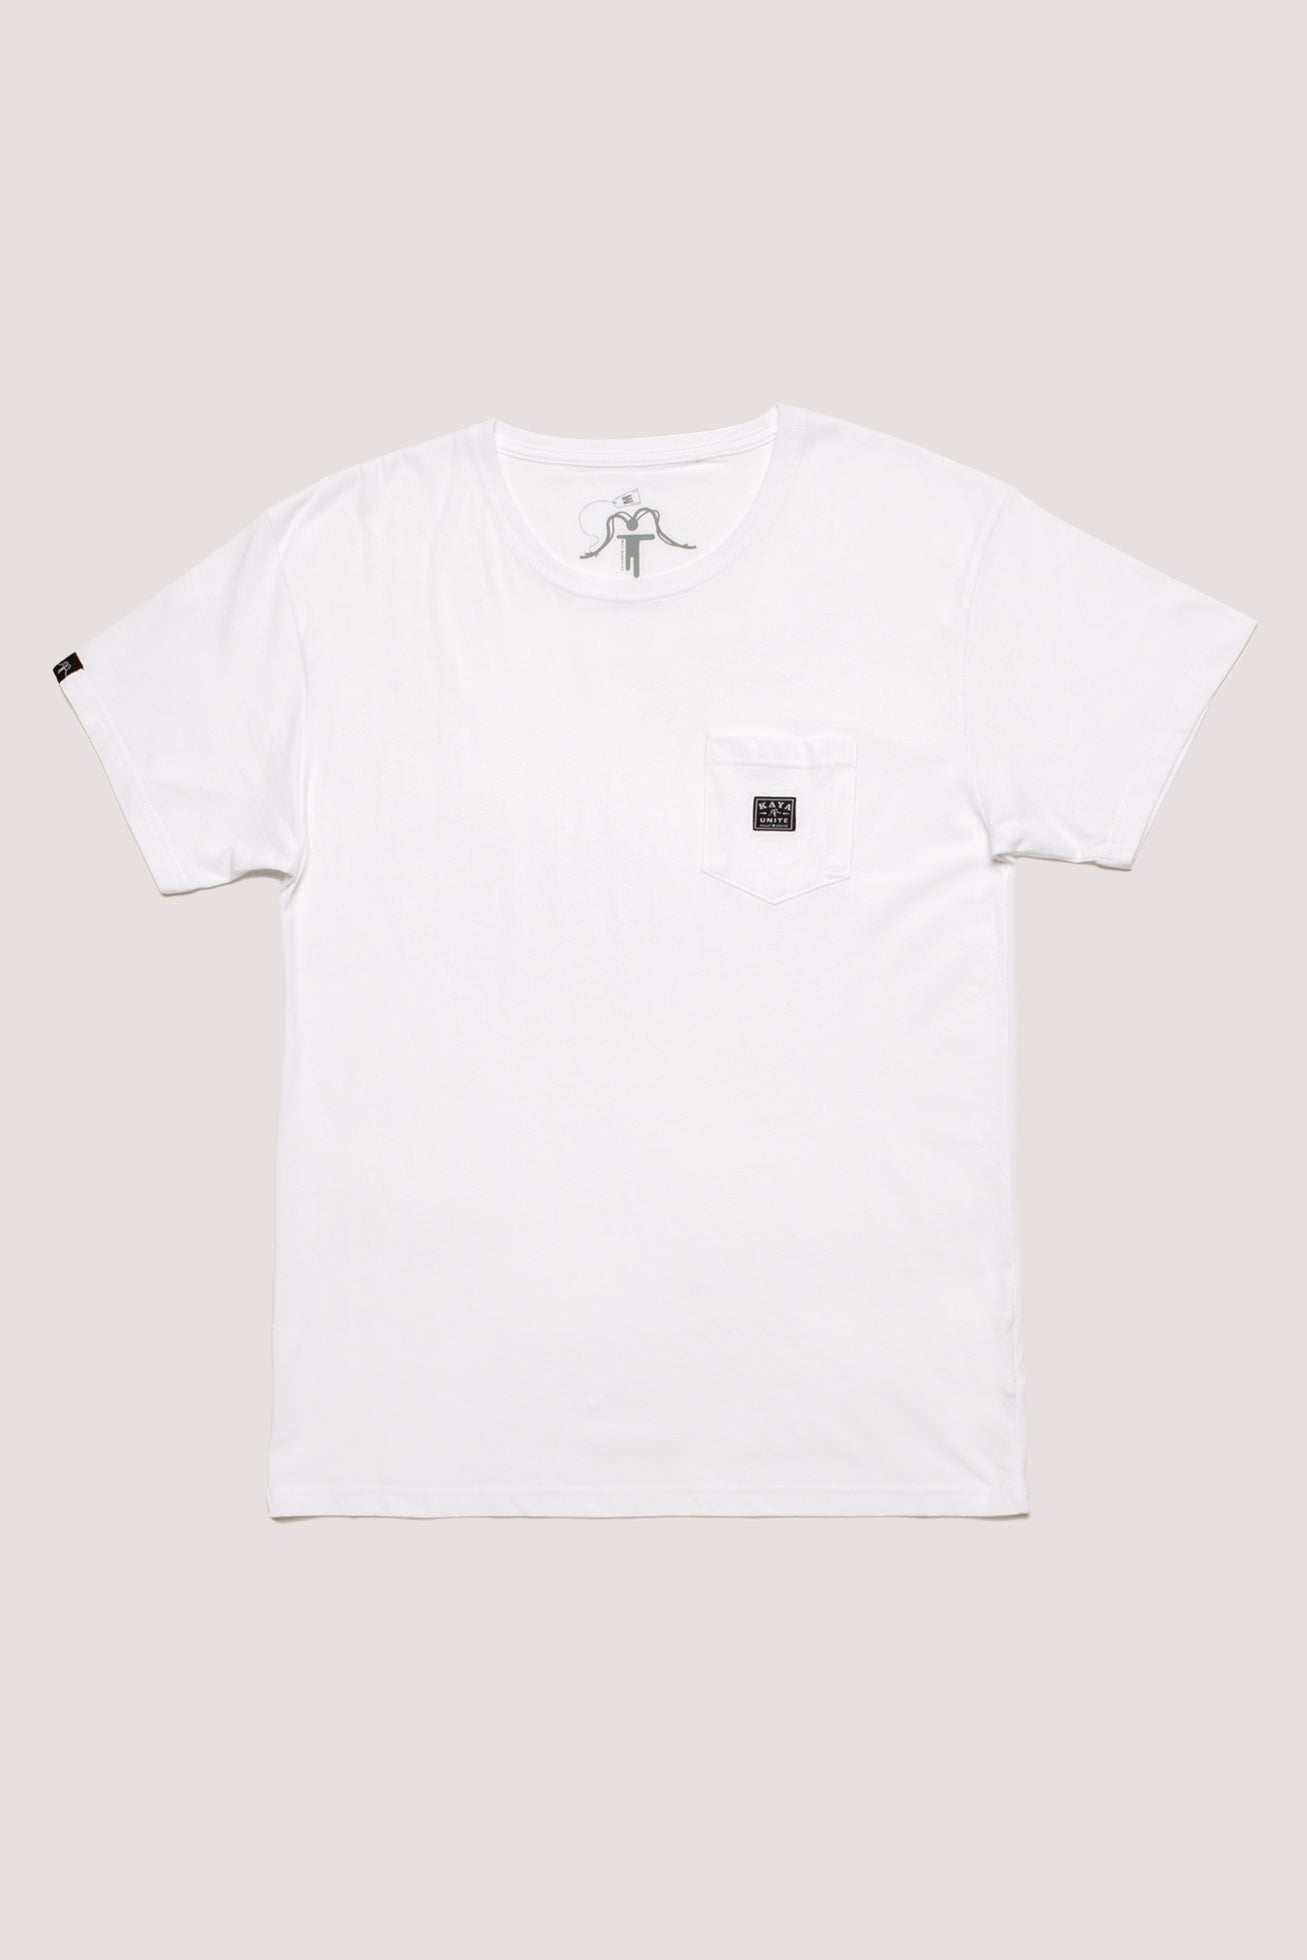 T-Shirt Daily White